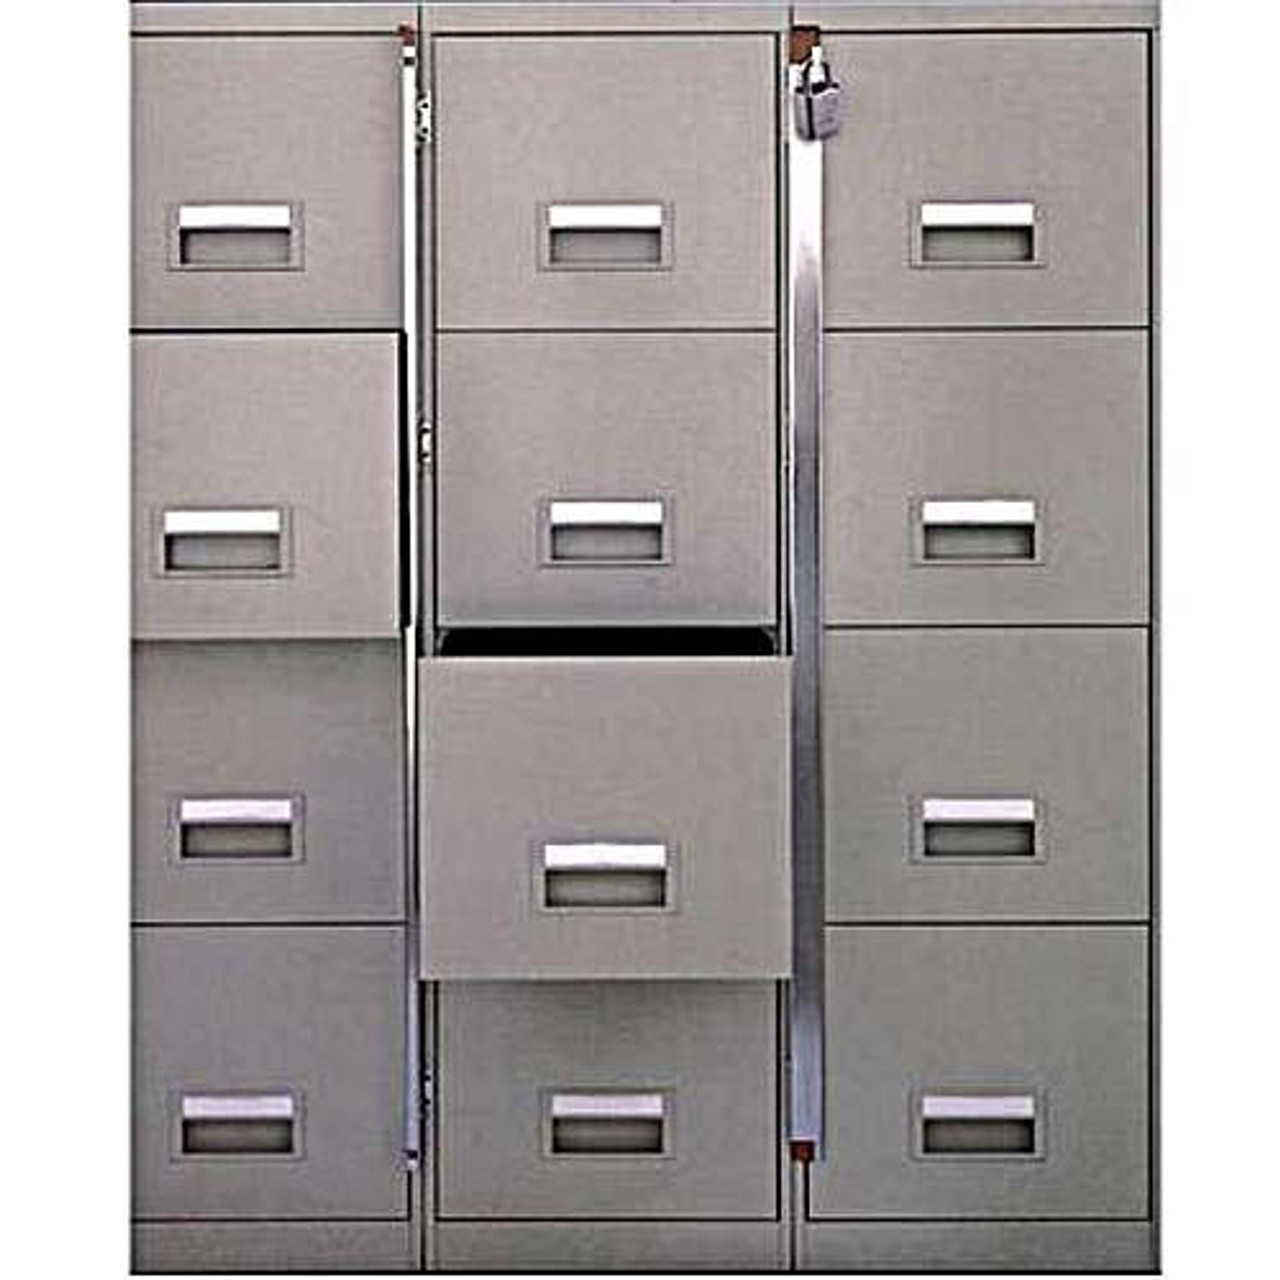 Diversified Spaces™ Flat File Storage